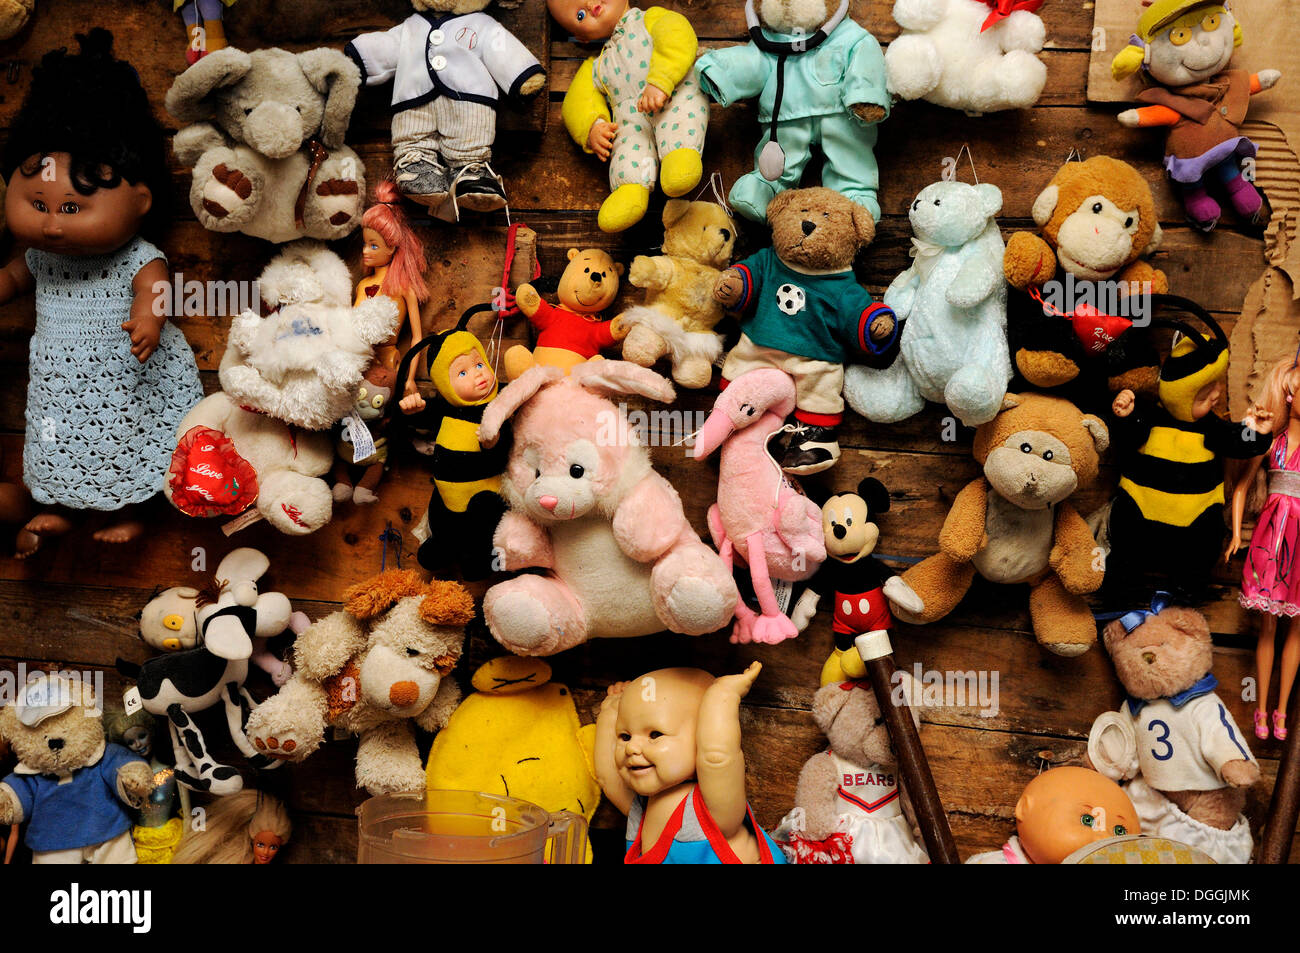 dolls and stuffed animals